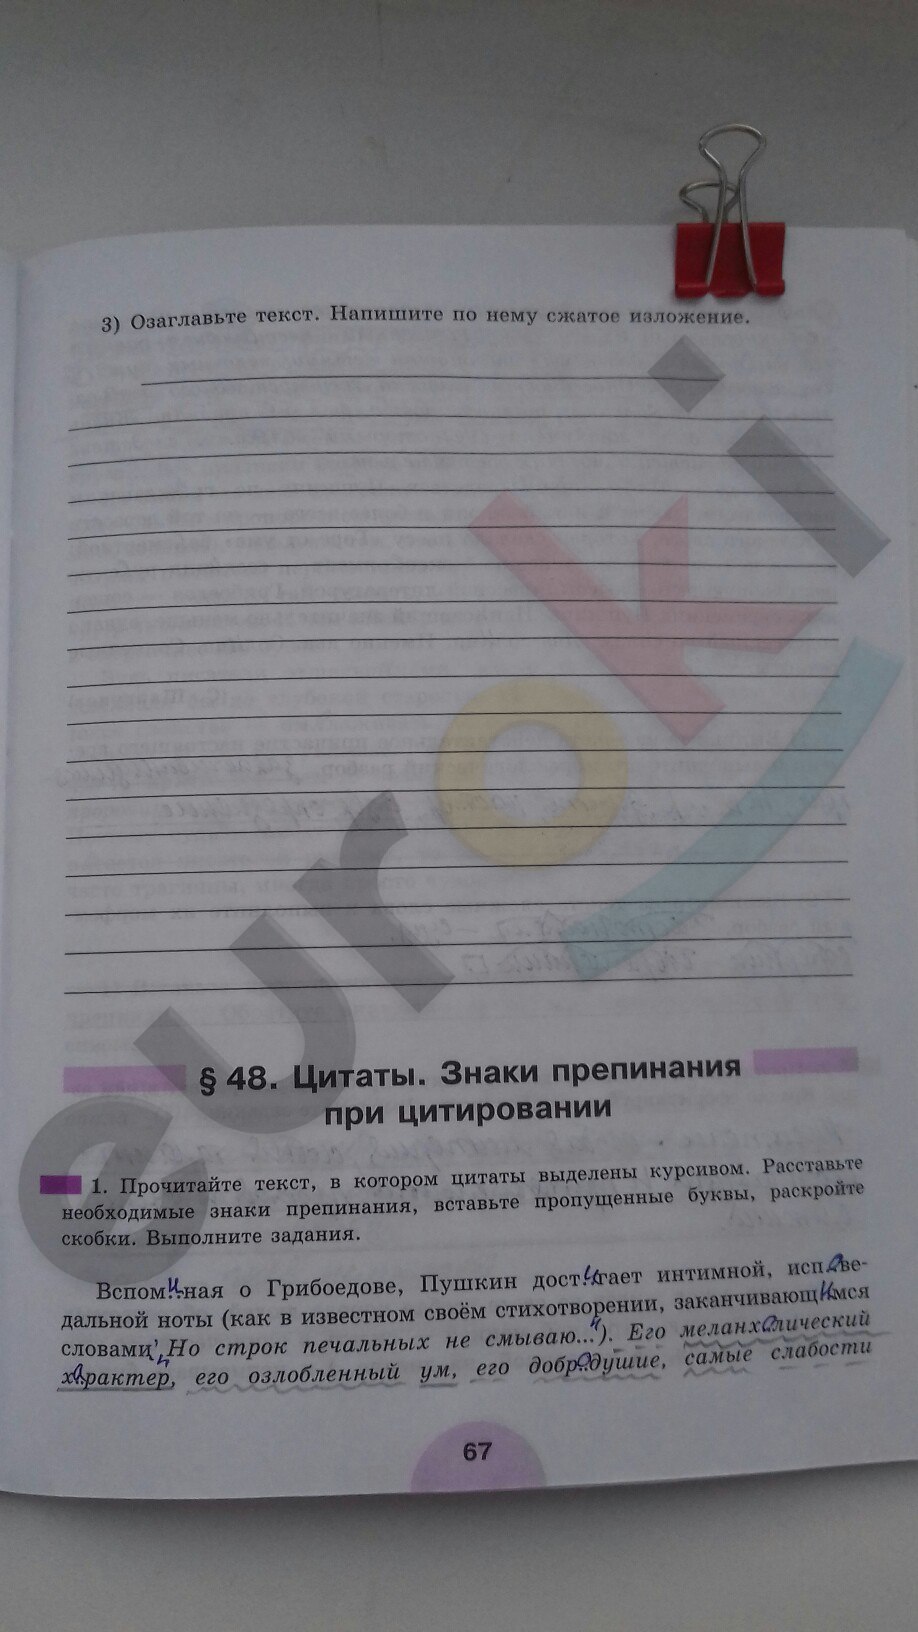 гдз 8 класс рабочая тетрадь часть 2 страница 67 русский язык Рыбченкова, Александрова